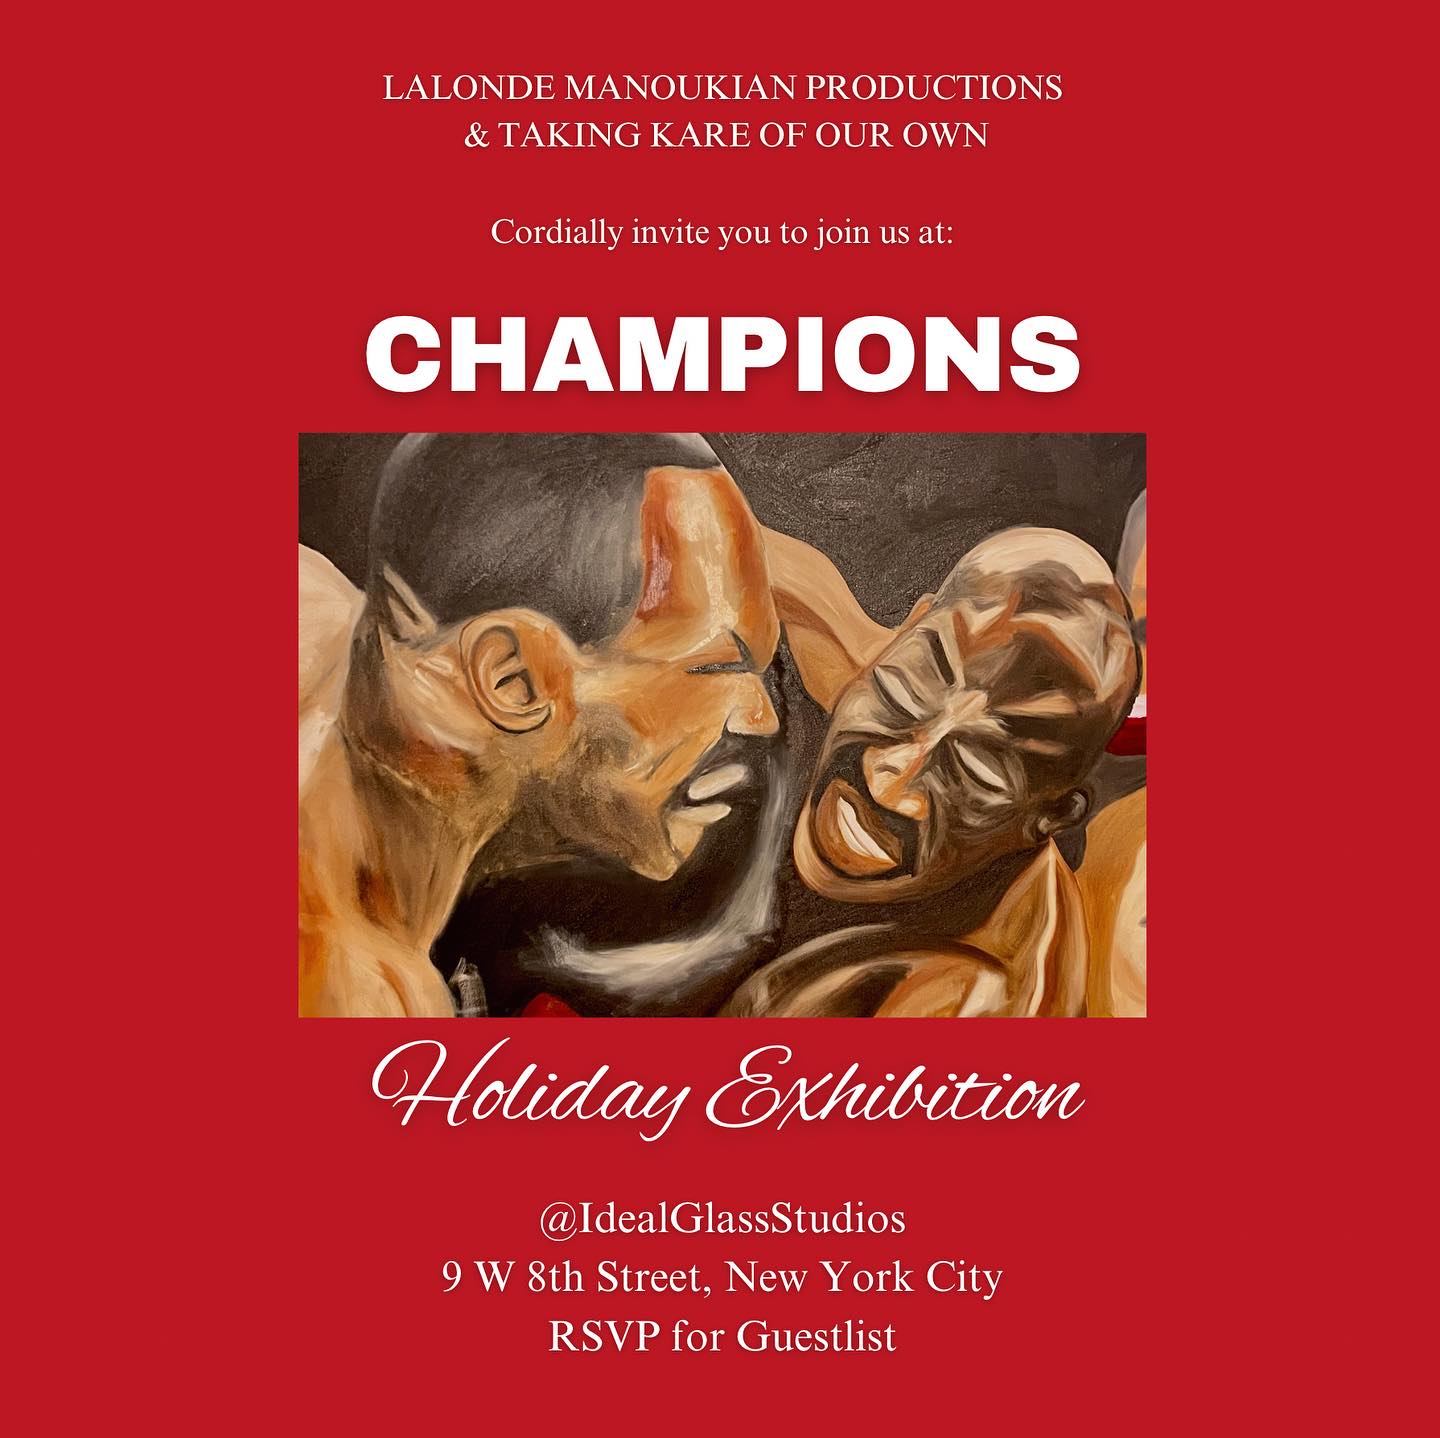 Coraggio featured in “Champions—Holiday Exhibition”